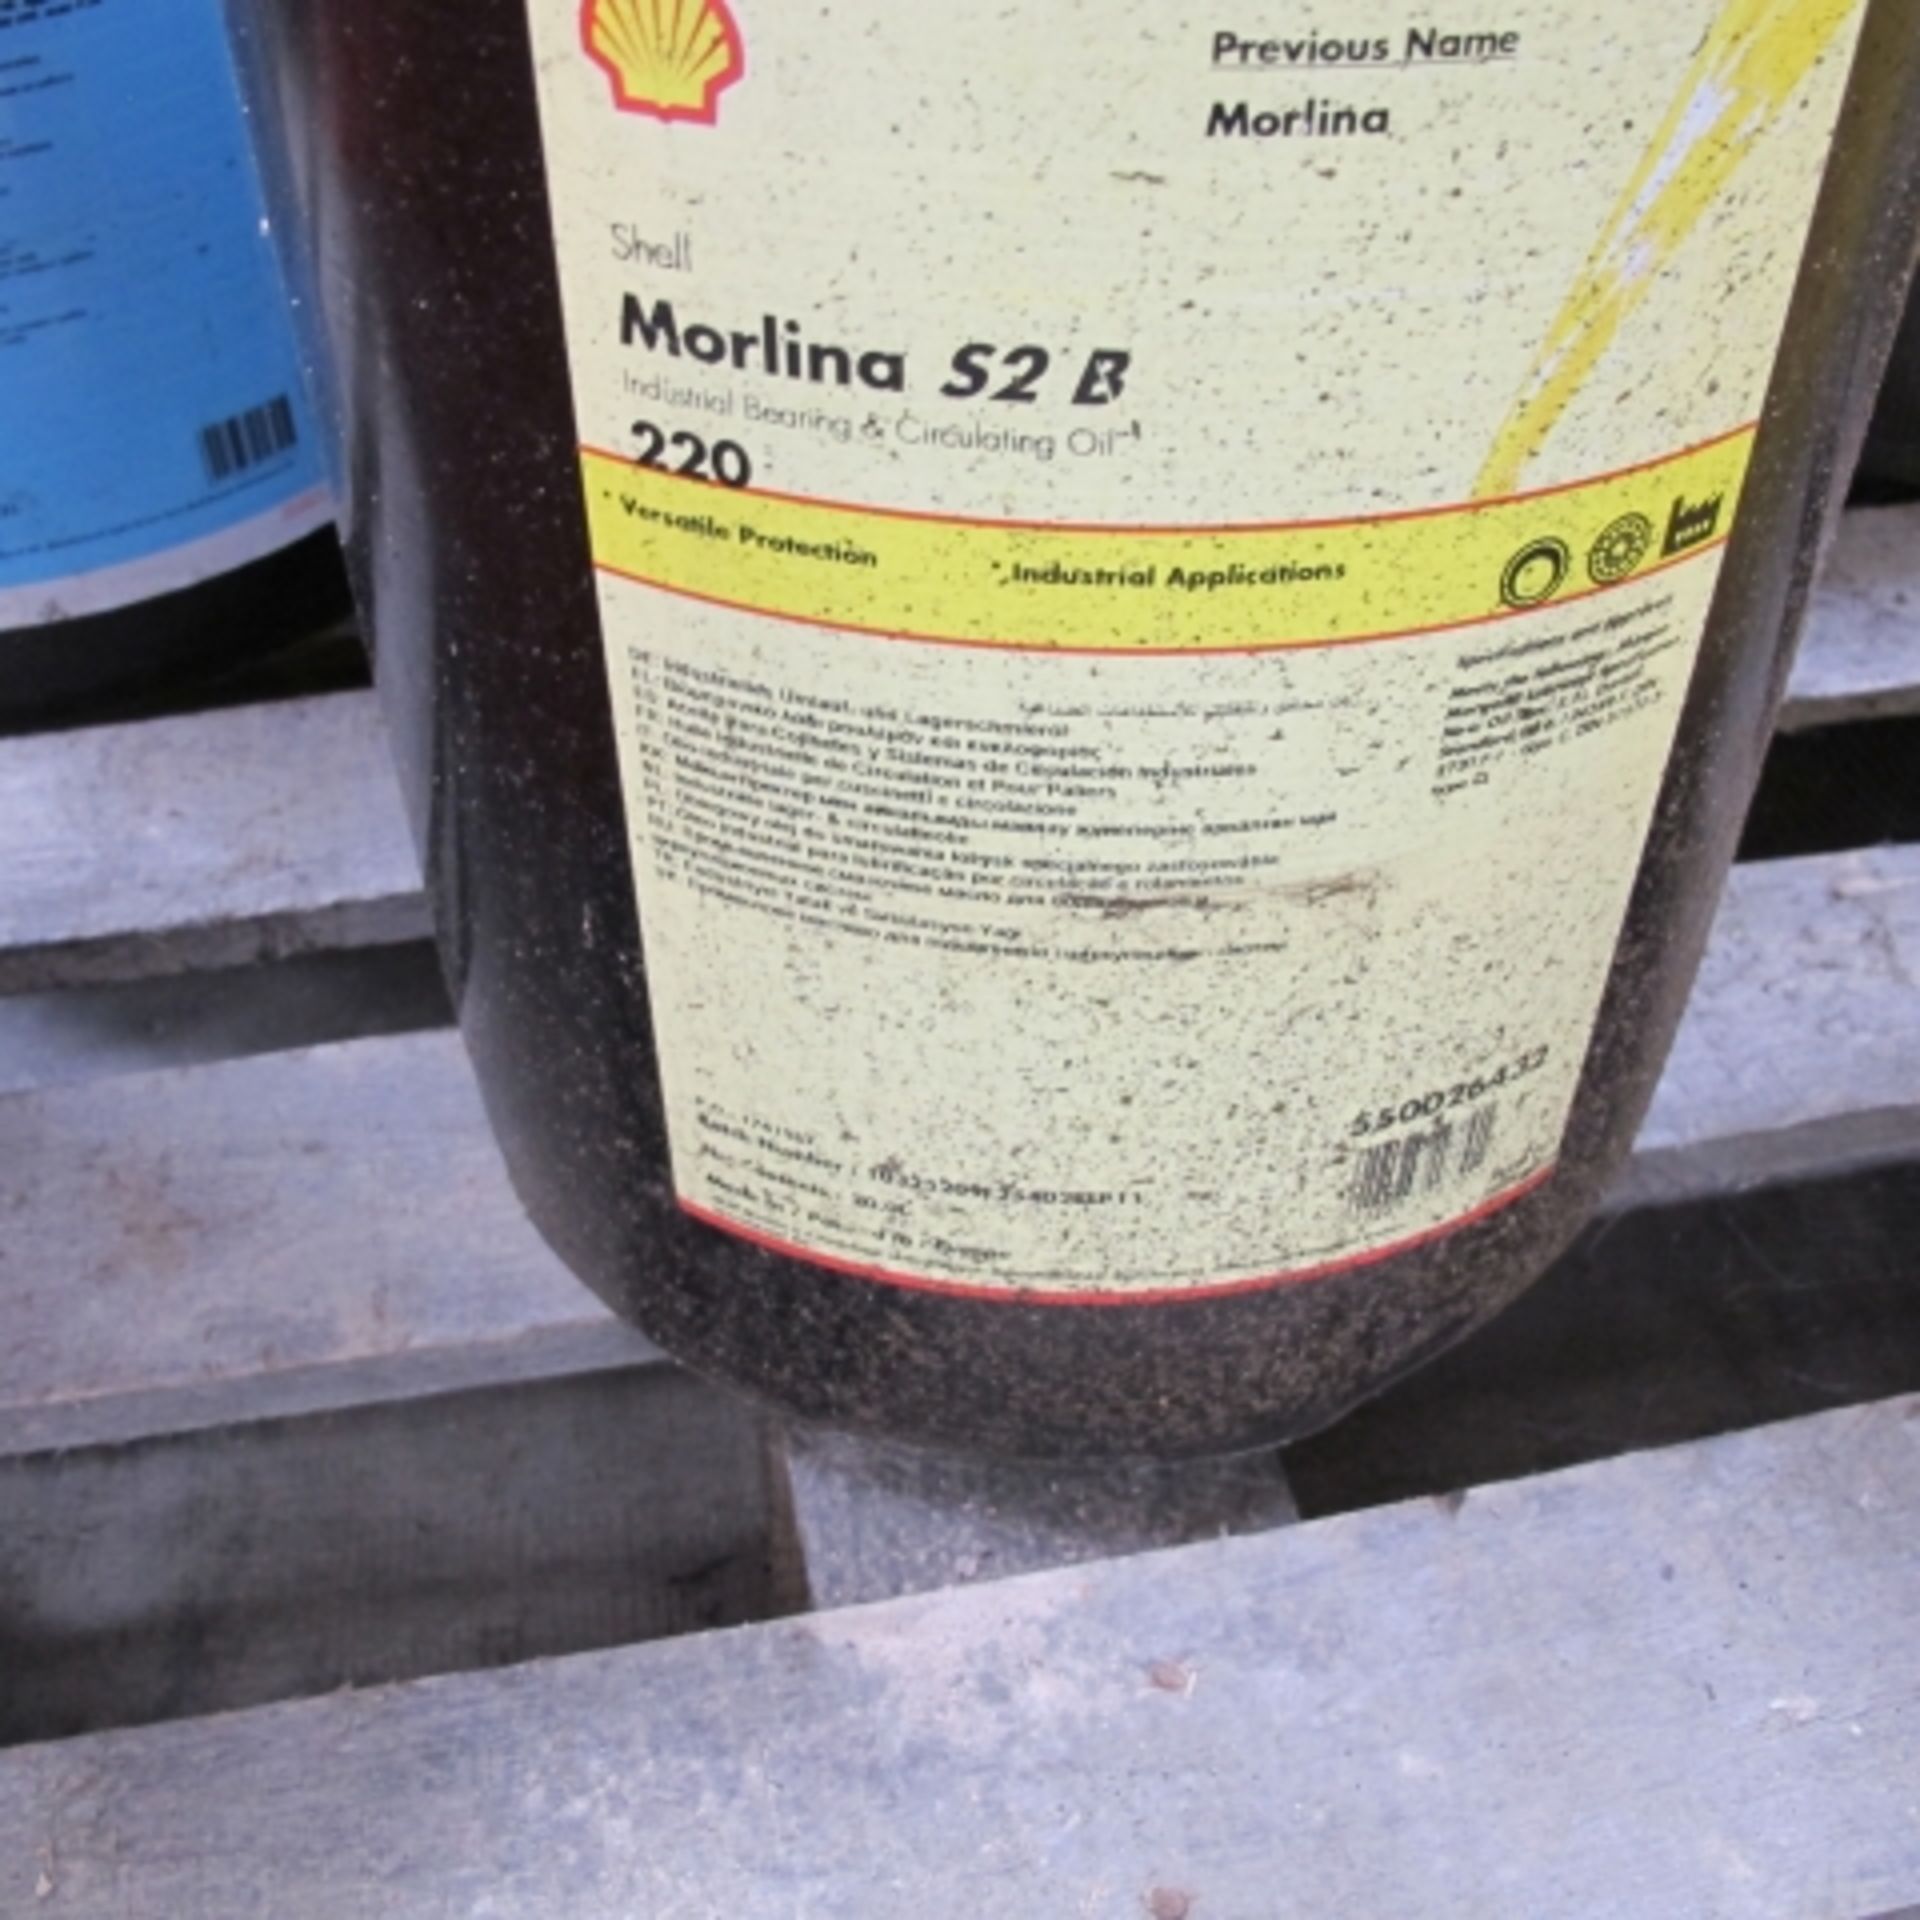 * A 20L Drum of Shell Morlina 52B Circulating Oil.